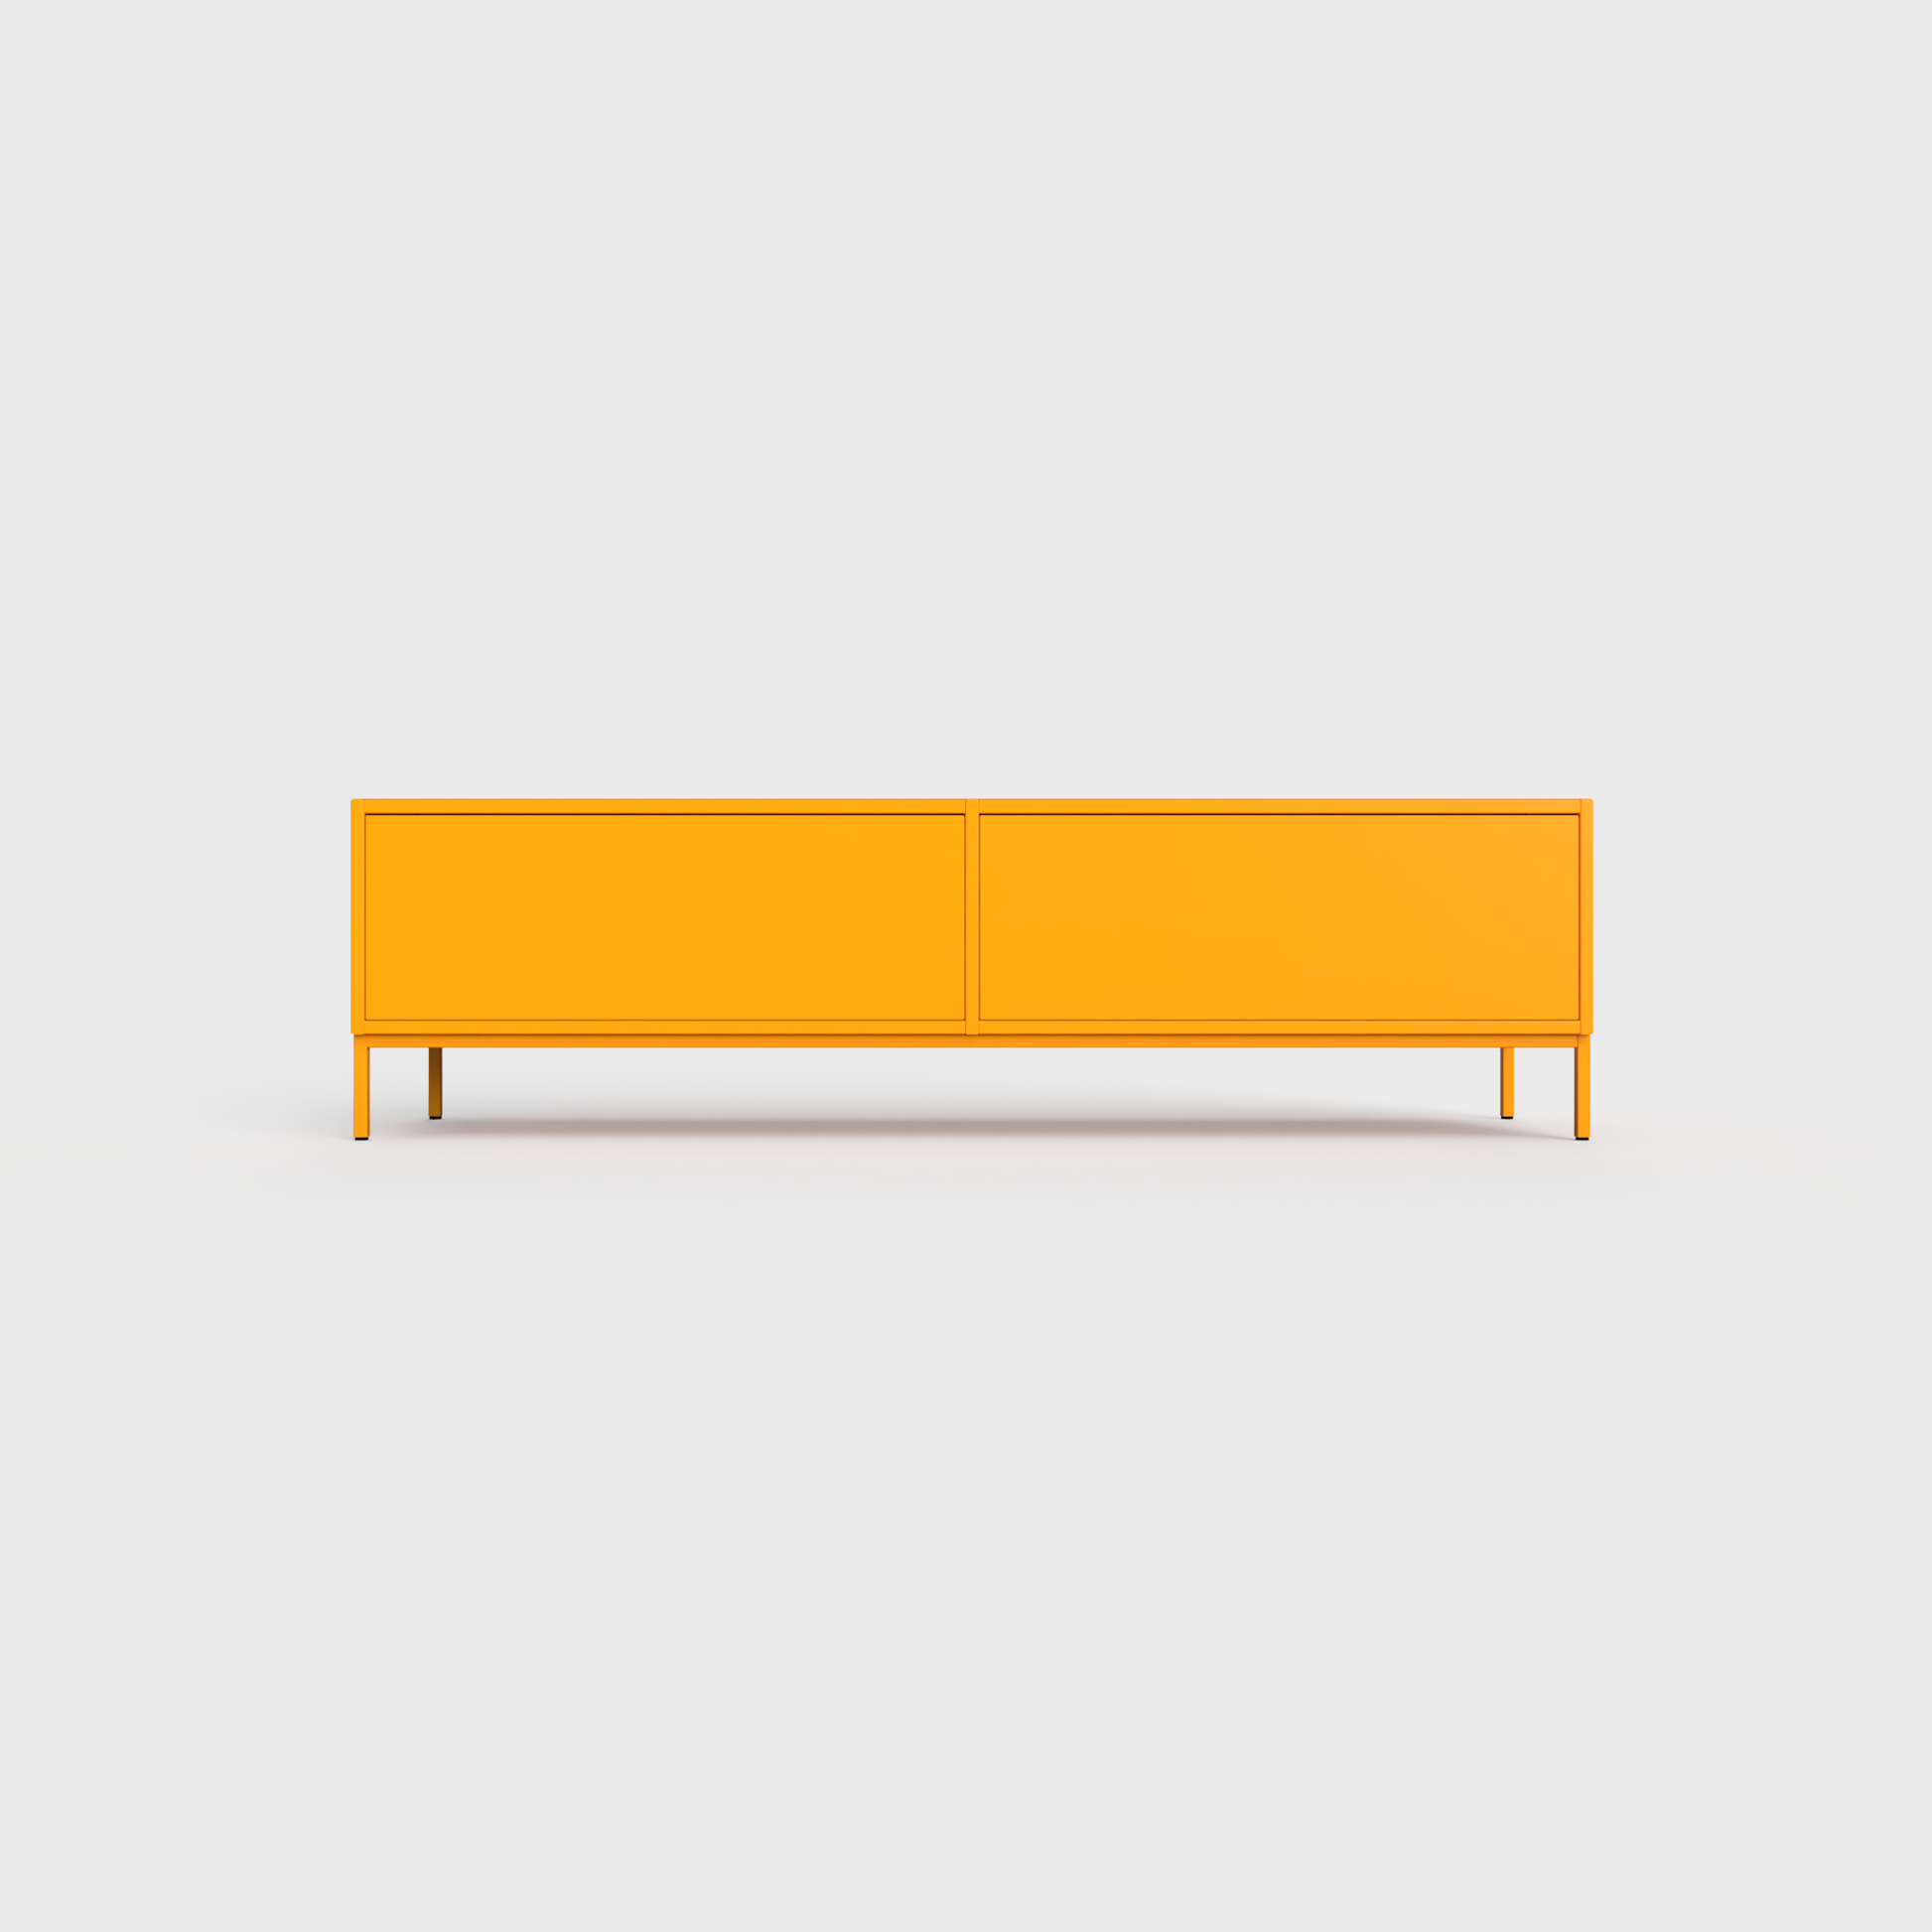 Prunus 01 Lowboard in Orange color, powder-coated steel, elegant and modern piece of furniture for your living room